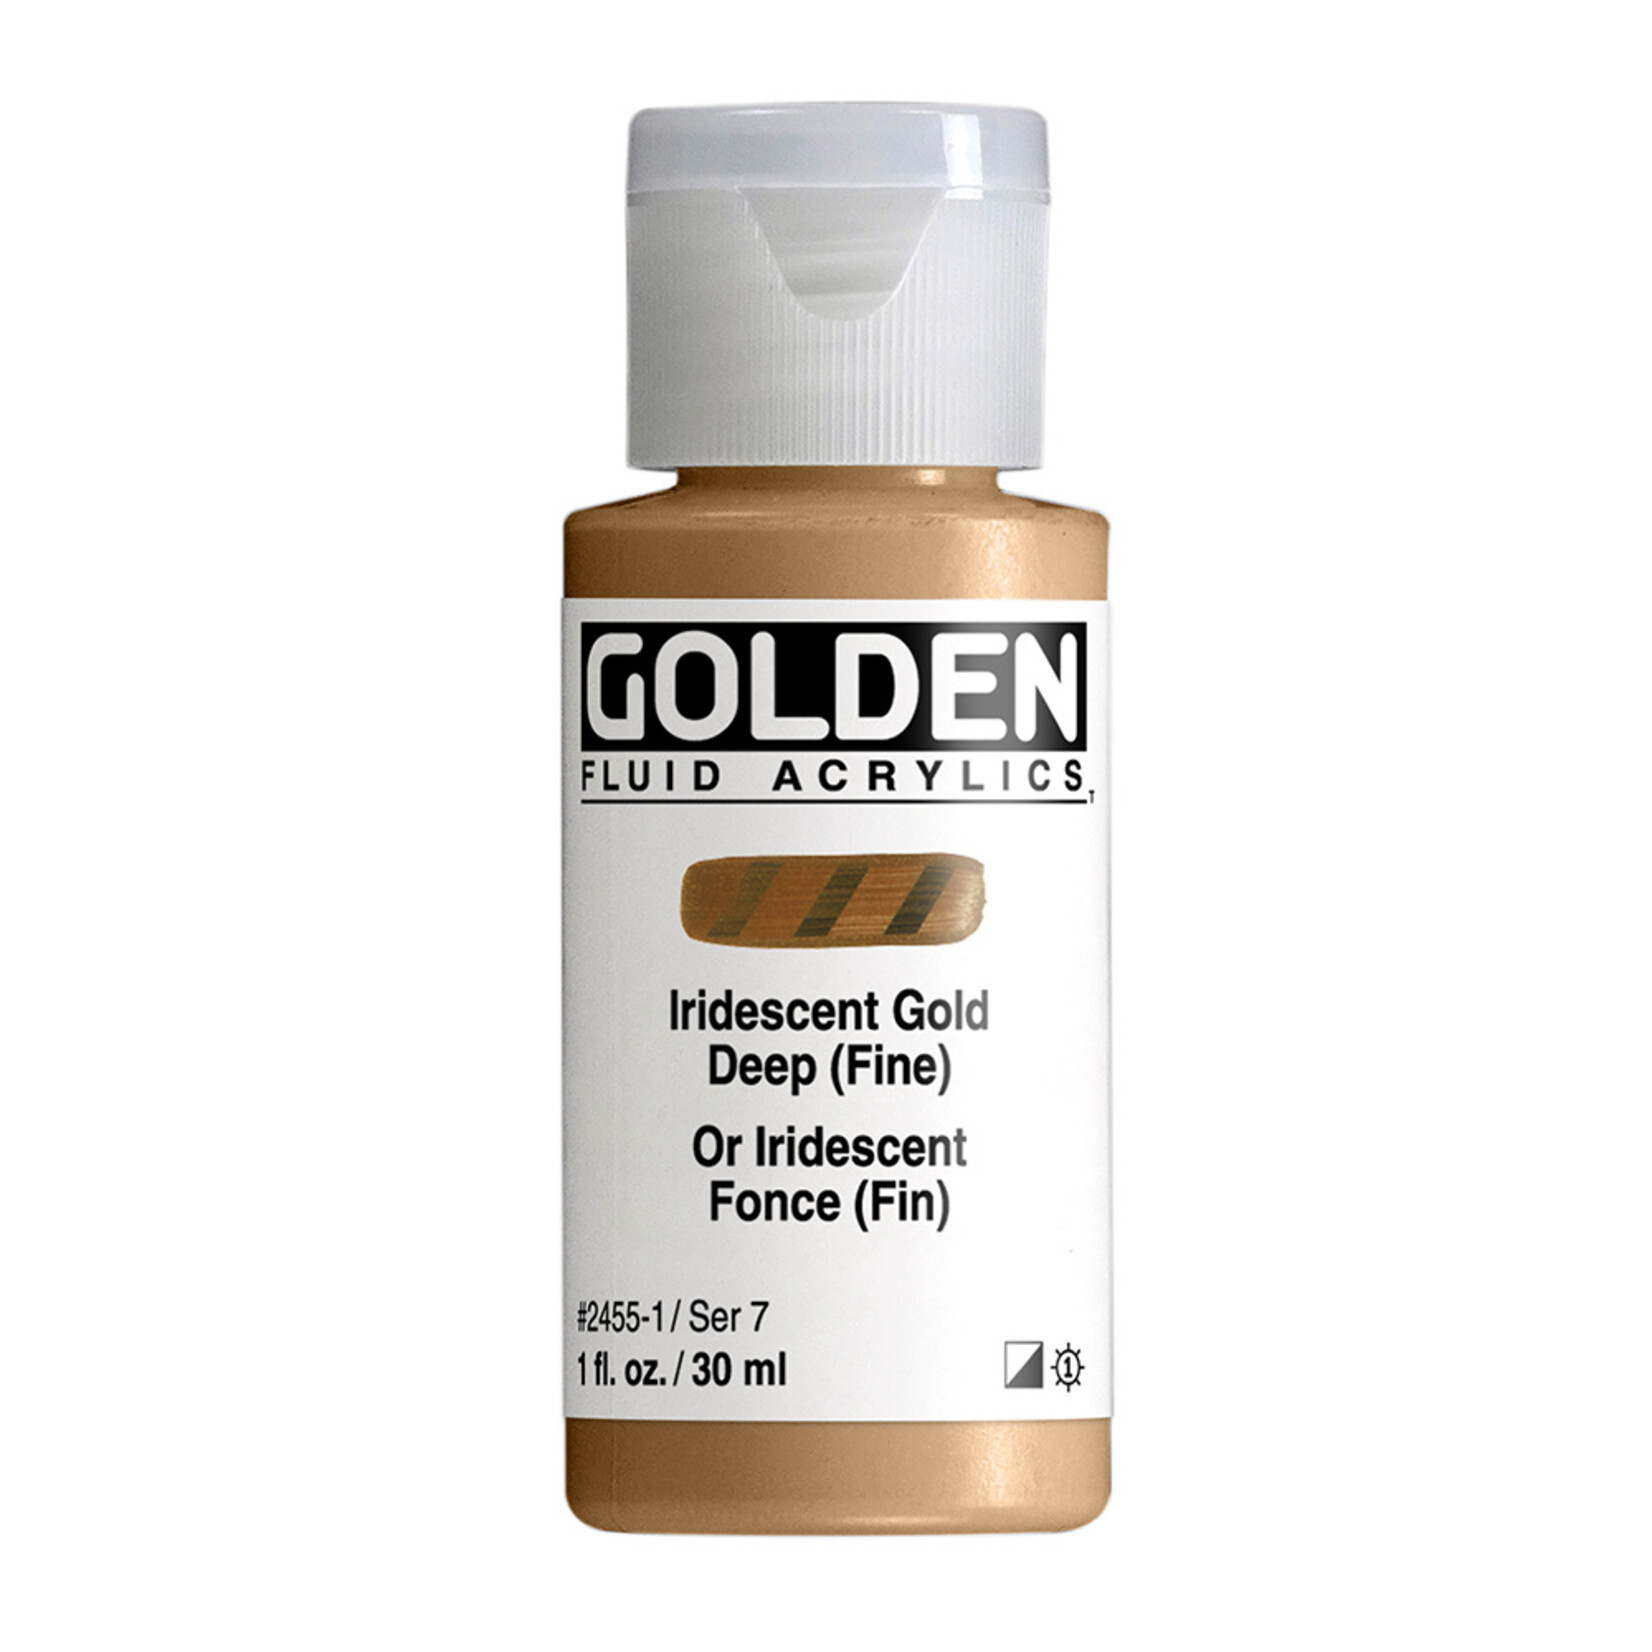 GOLDEN GOLDEN FLUID ACRYLIC 1OZ IRIDESCENT BRIGHT GOLD (FINE)